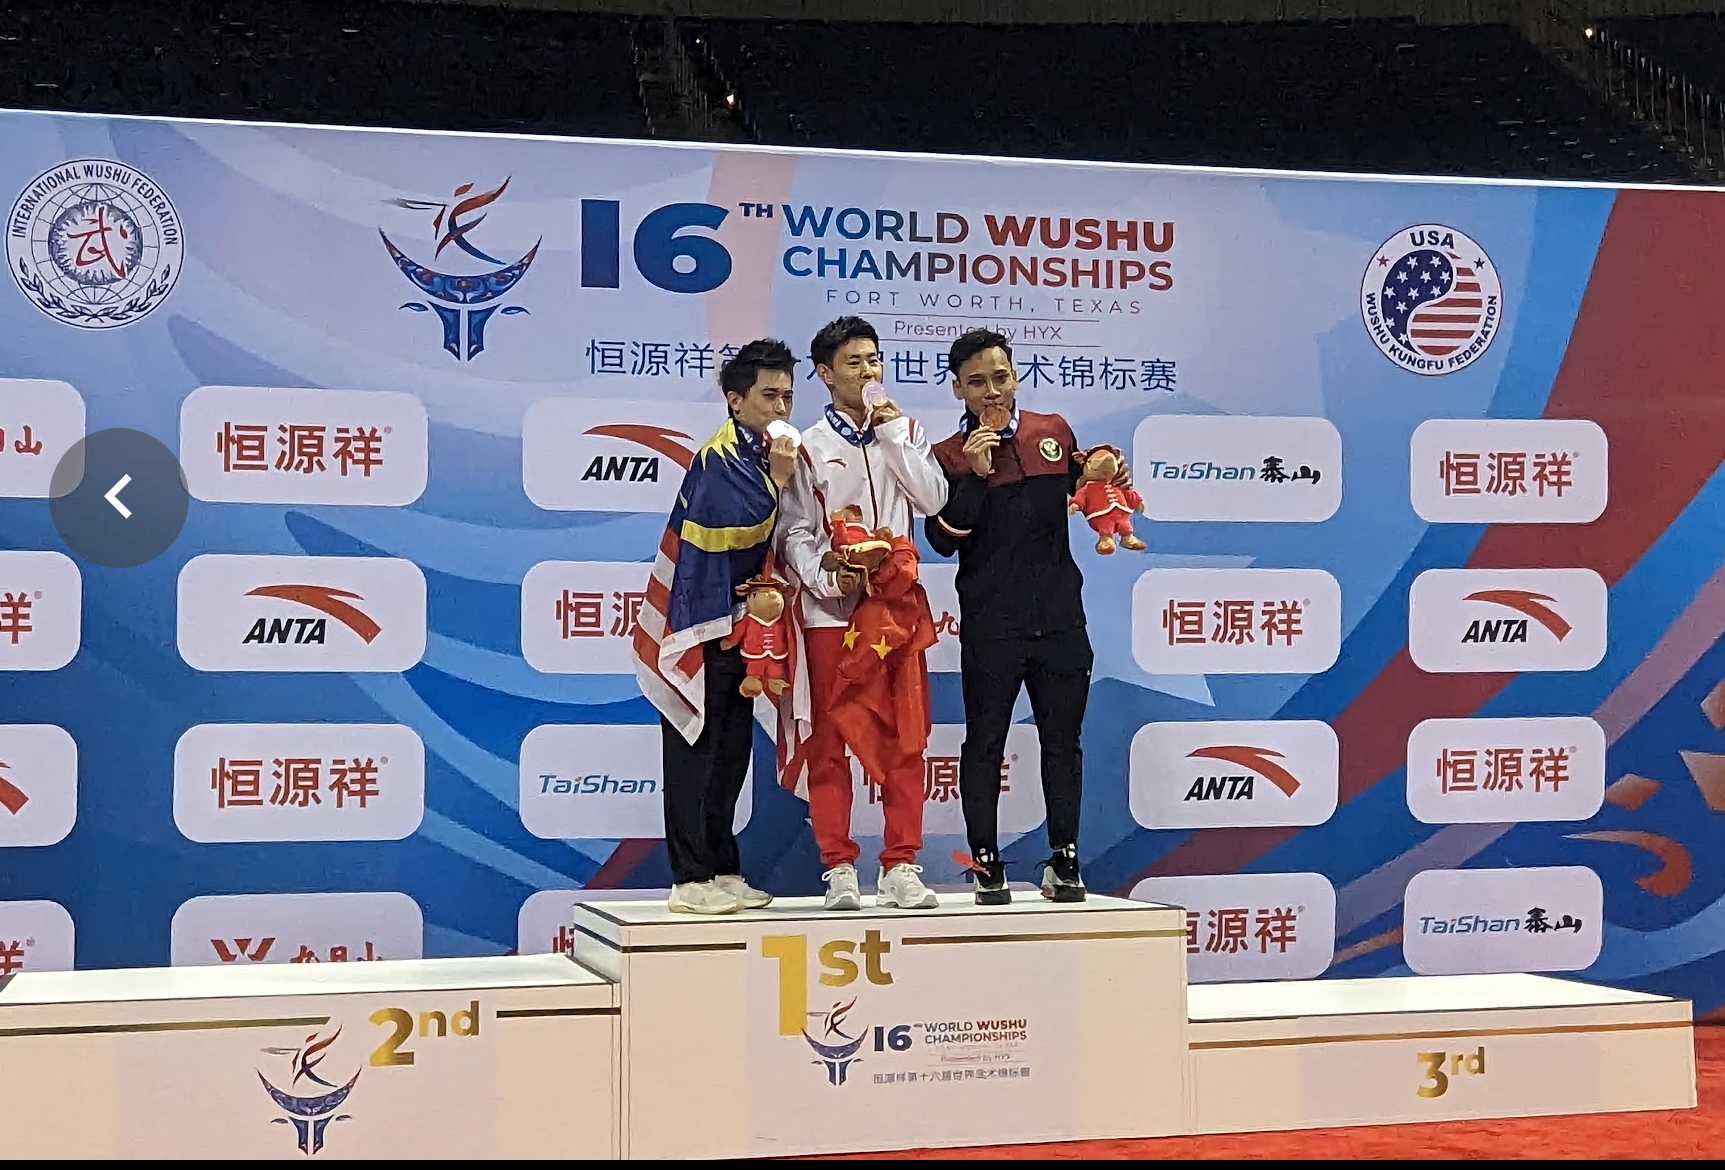 Zhang Qingchun tastes success after winning gold in men’s Qiangshu at the World Wushu Championships in Ft. Worth, Texas.